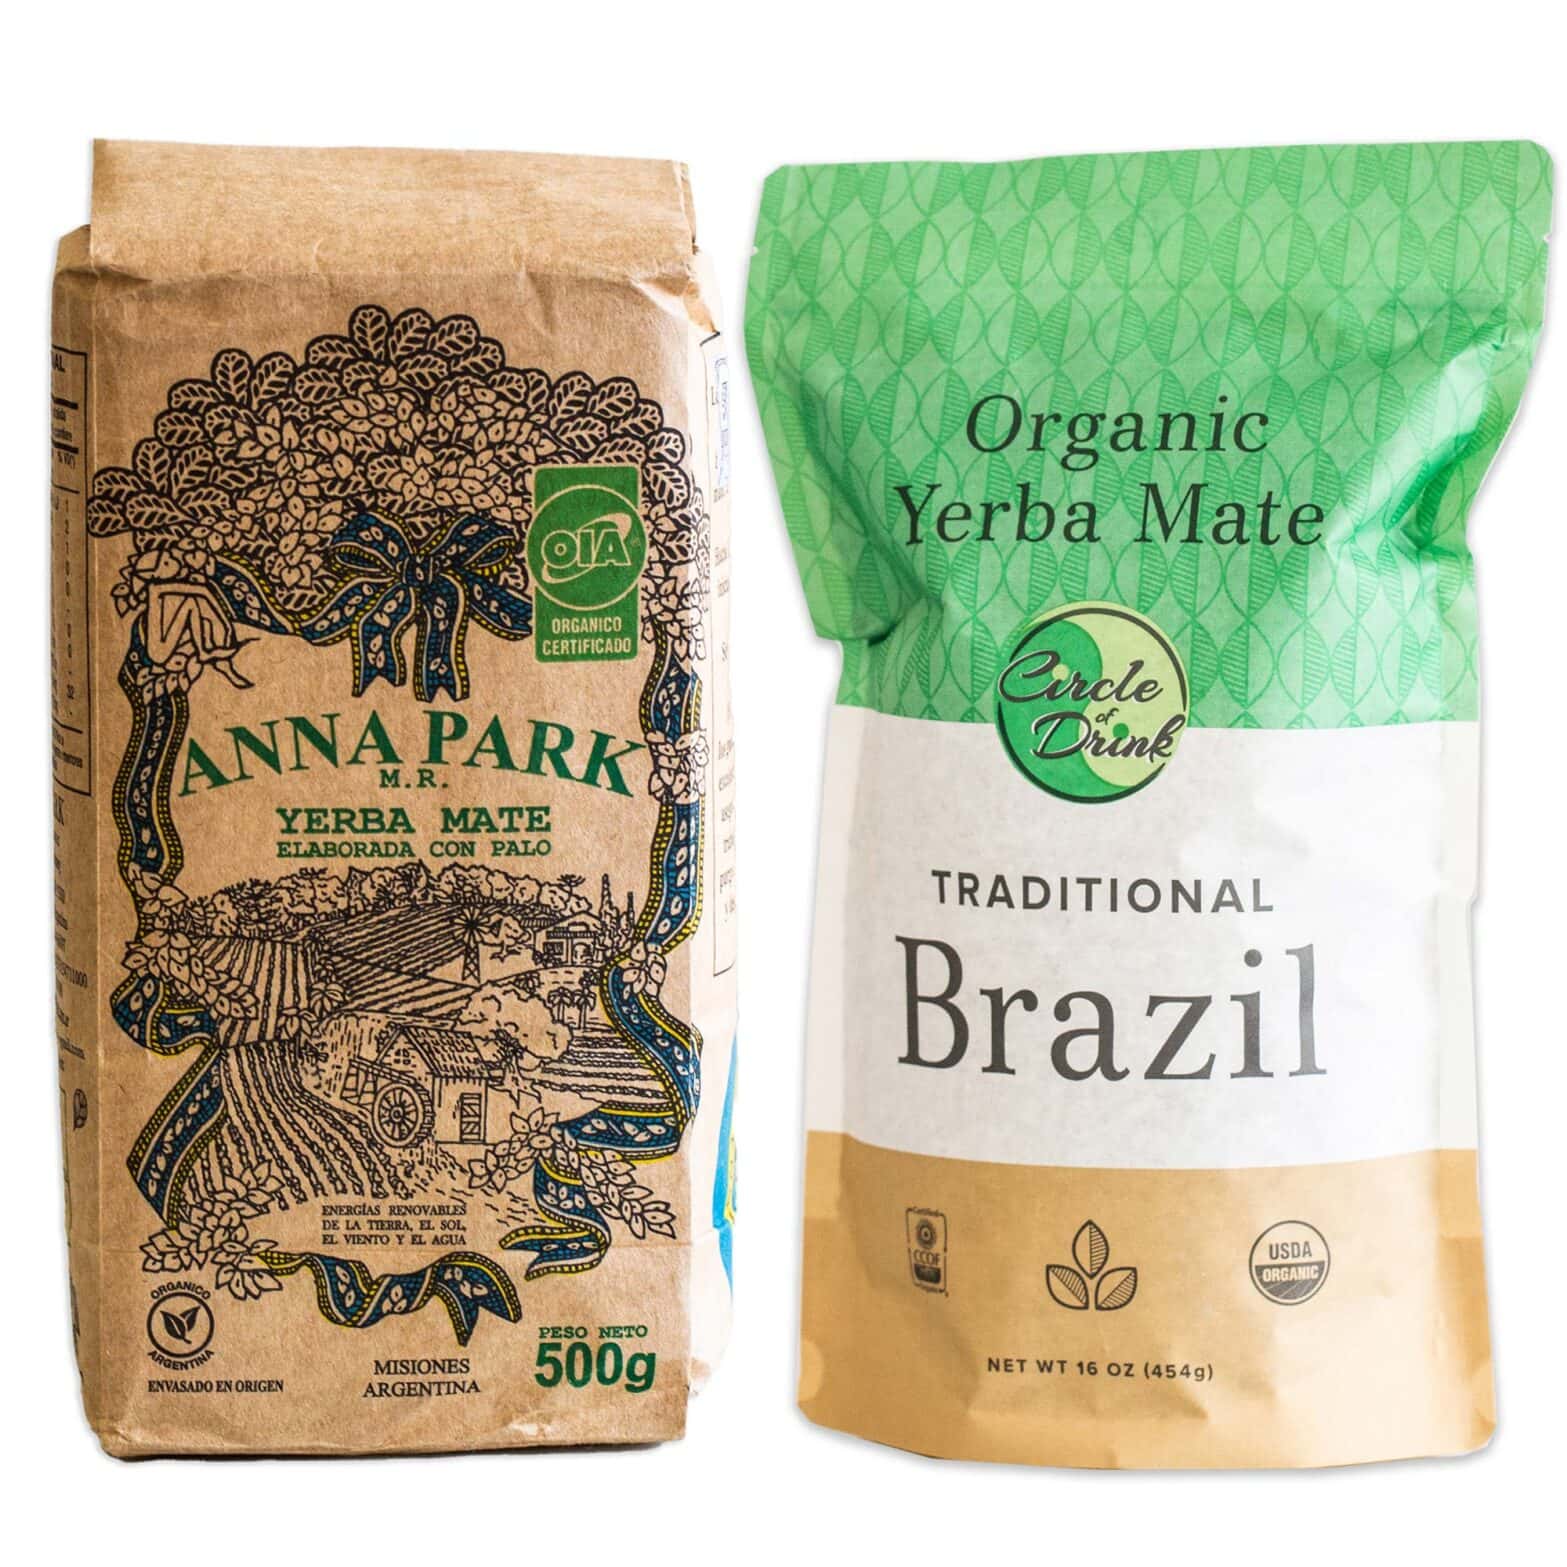 Anna Park and Brazil Traditional Organic Yerba Mate Tea